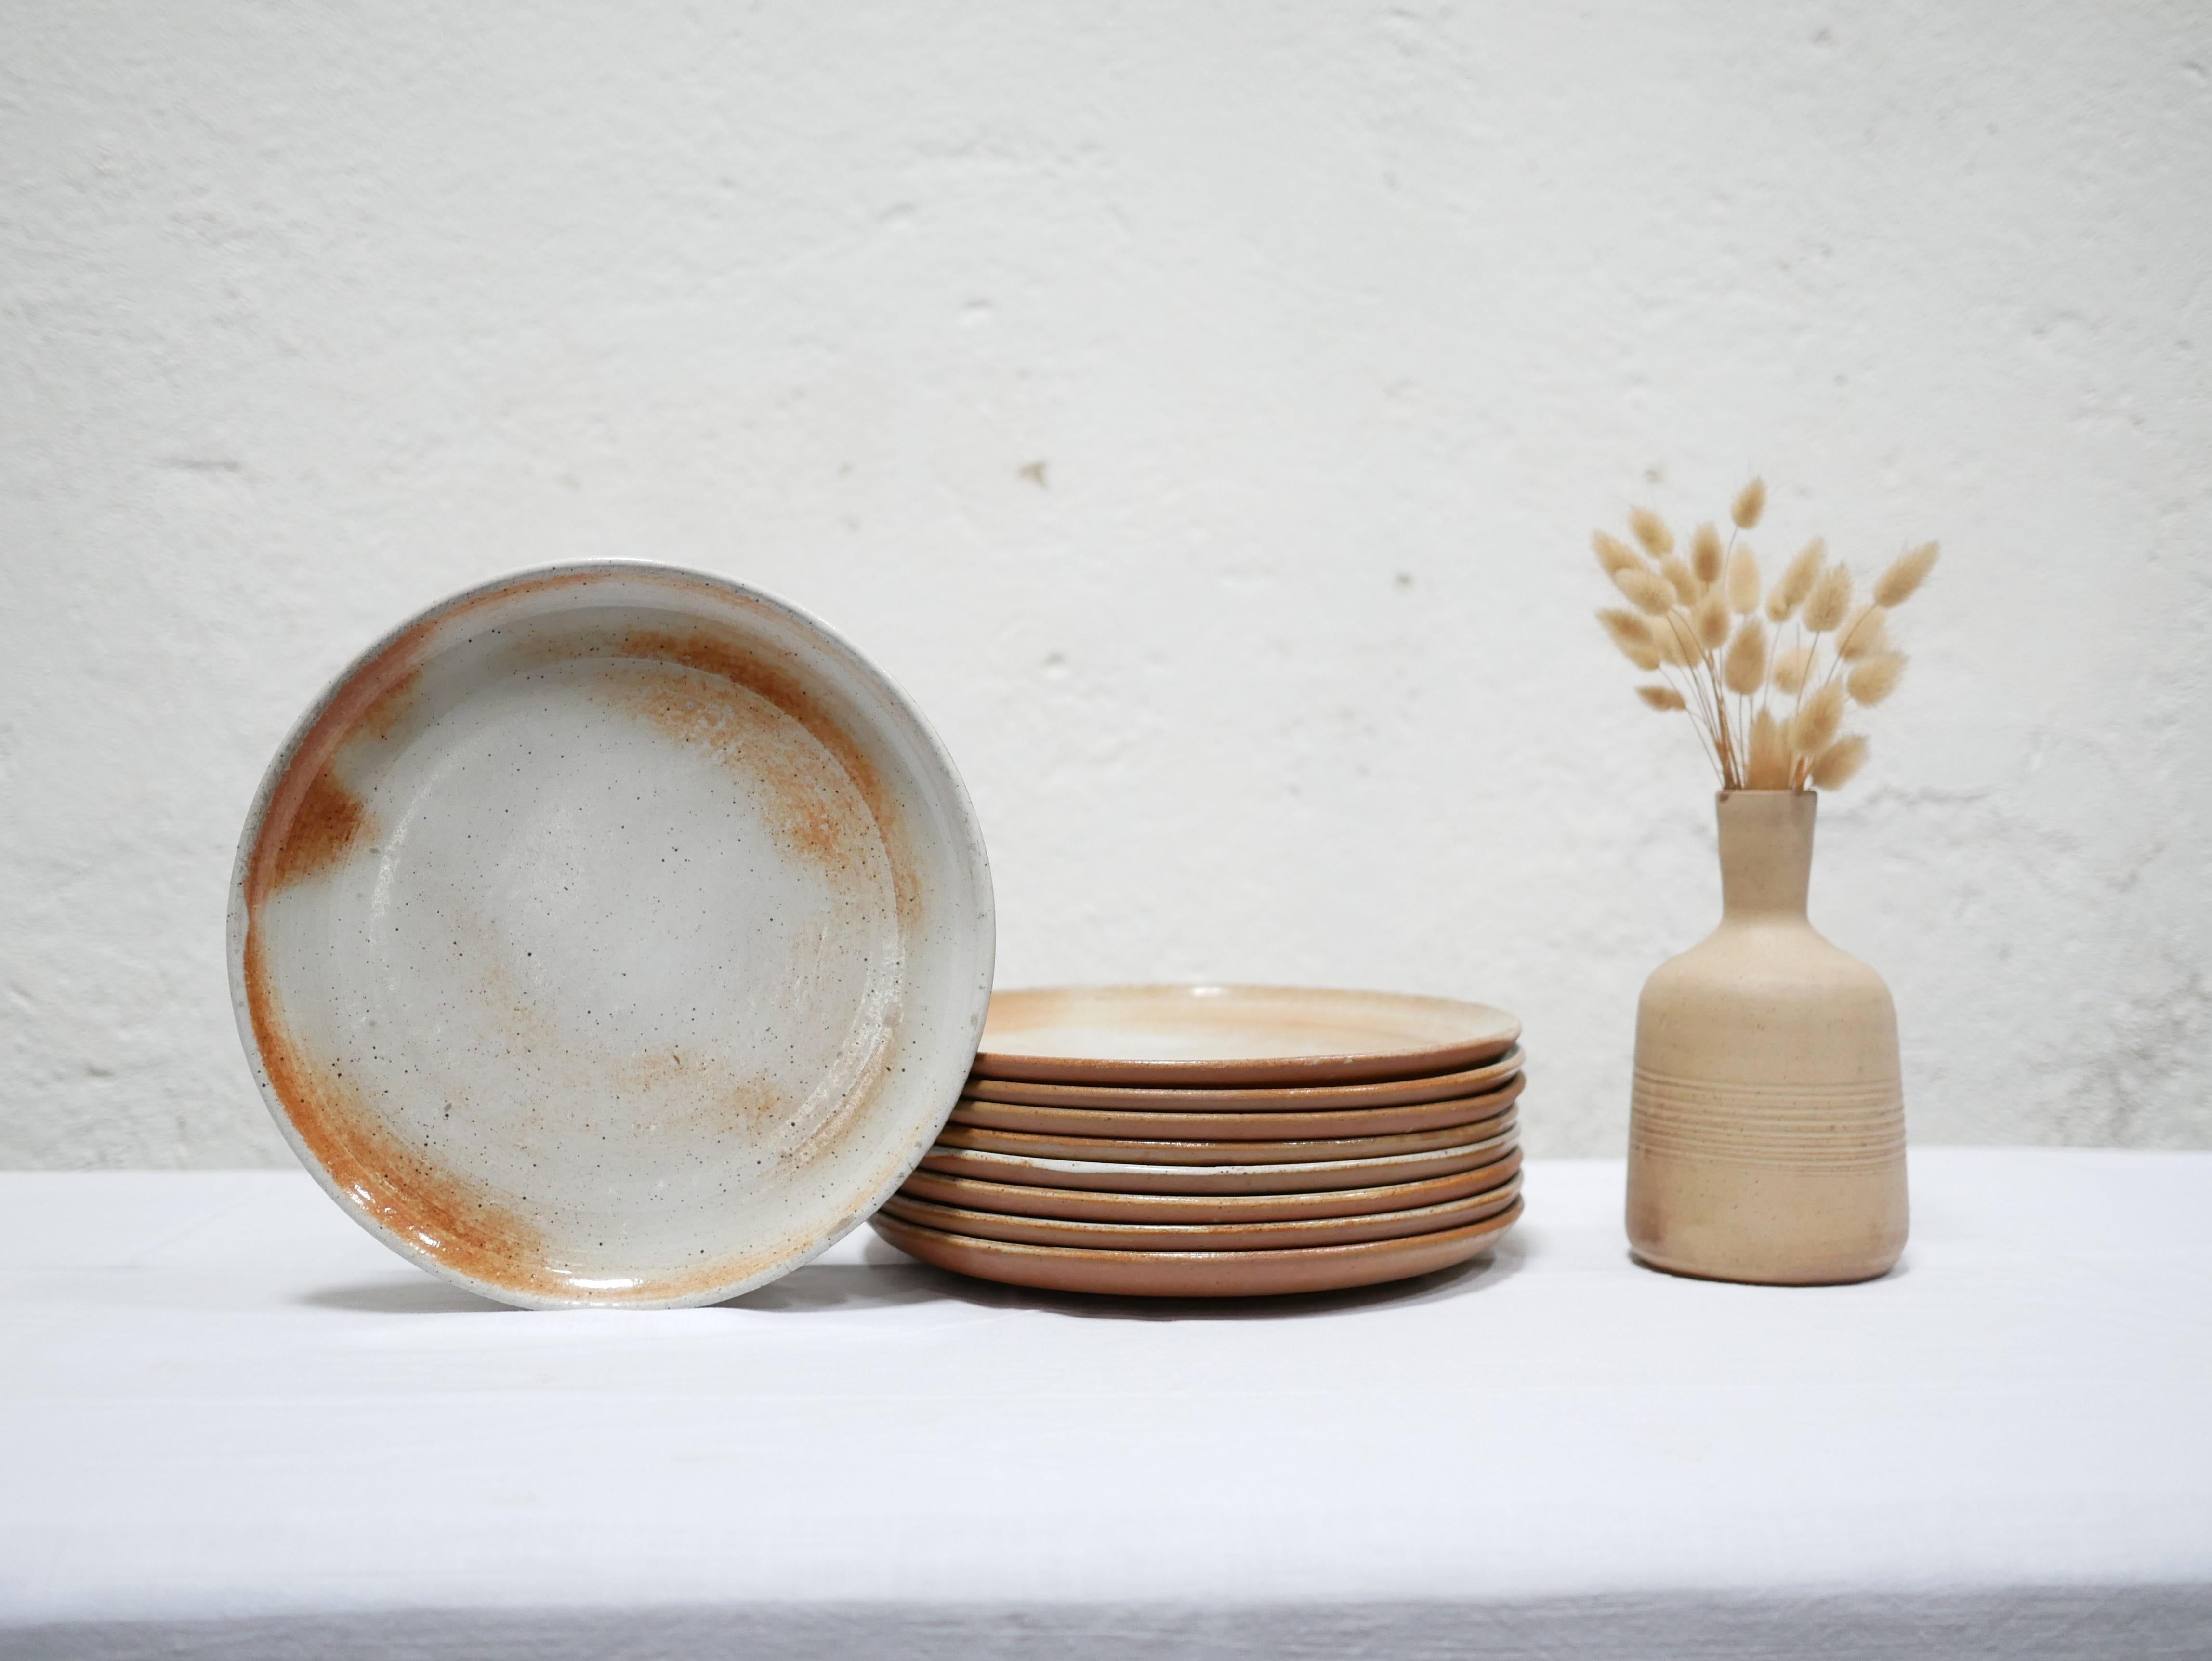 Sandstone Series of 9 vintage stoneware plates by the Poteries du Marais, France